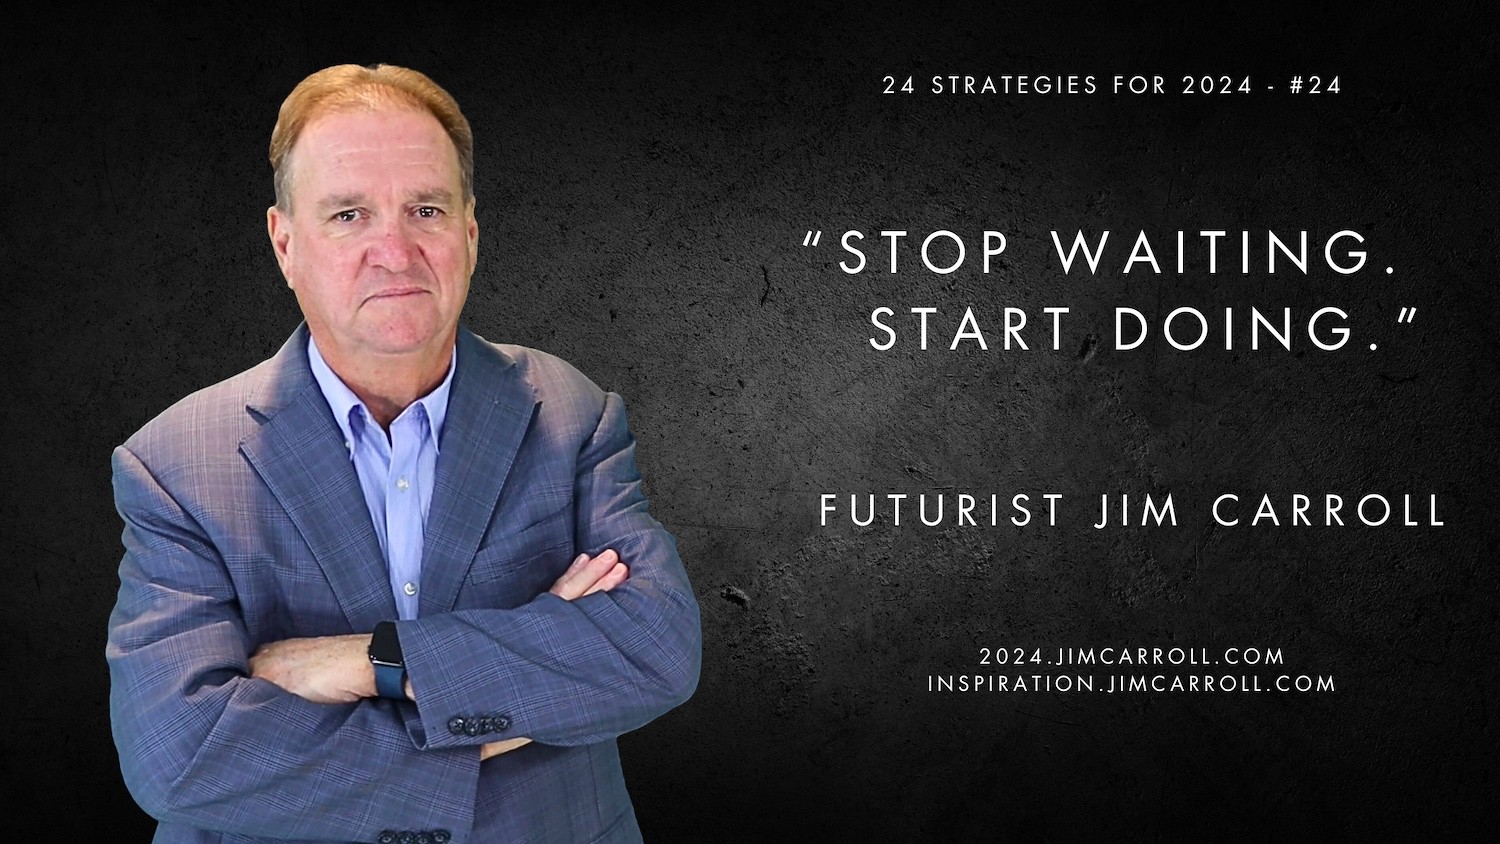 "Stop waiting. Start doing!" - Futurist Jim Carroll